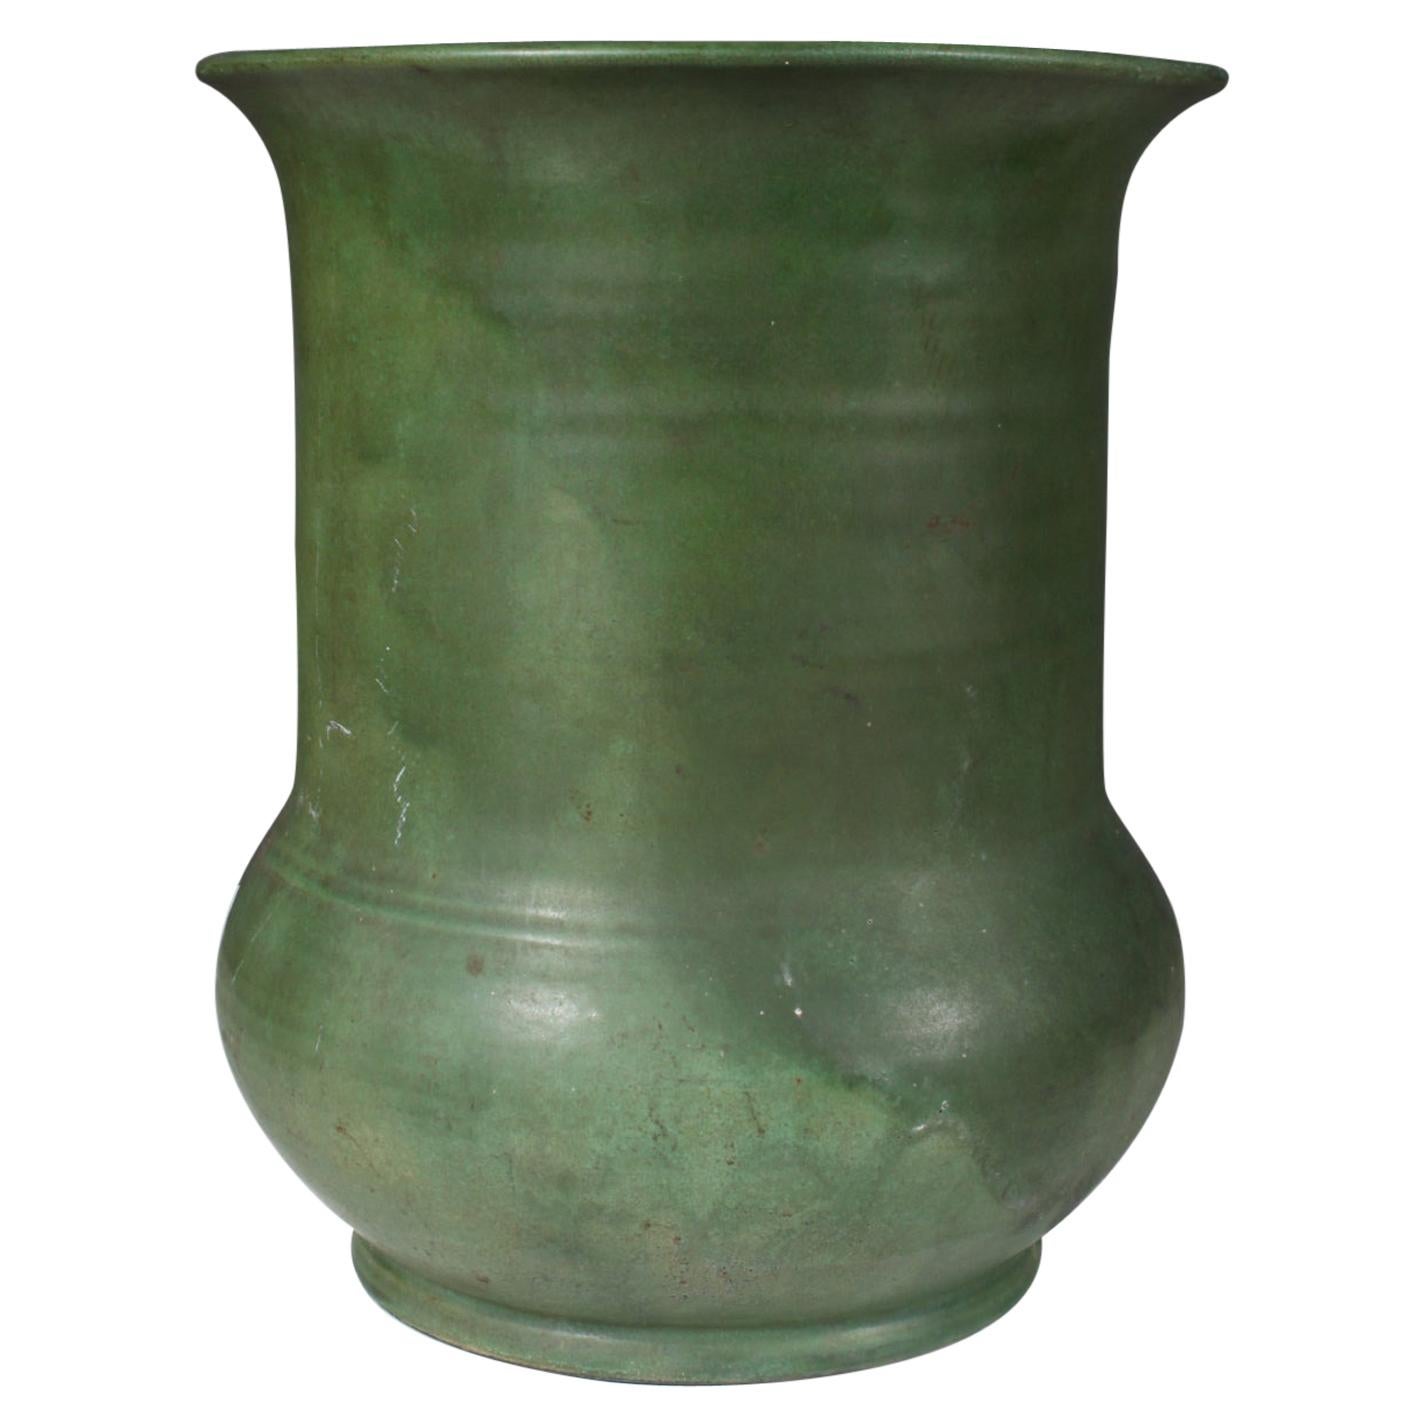 Herman A. Kähler Vase